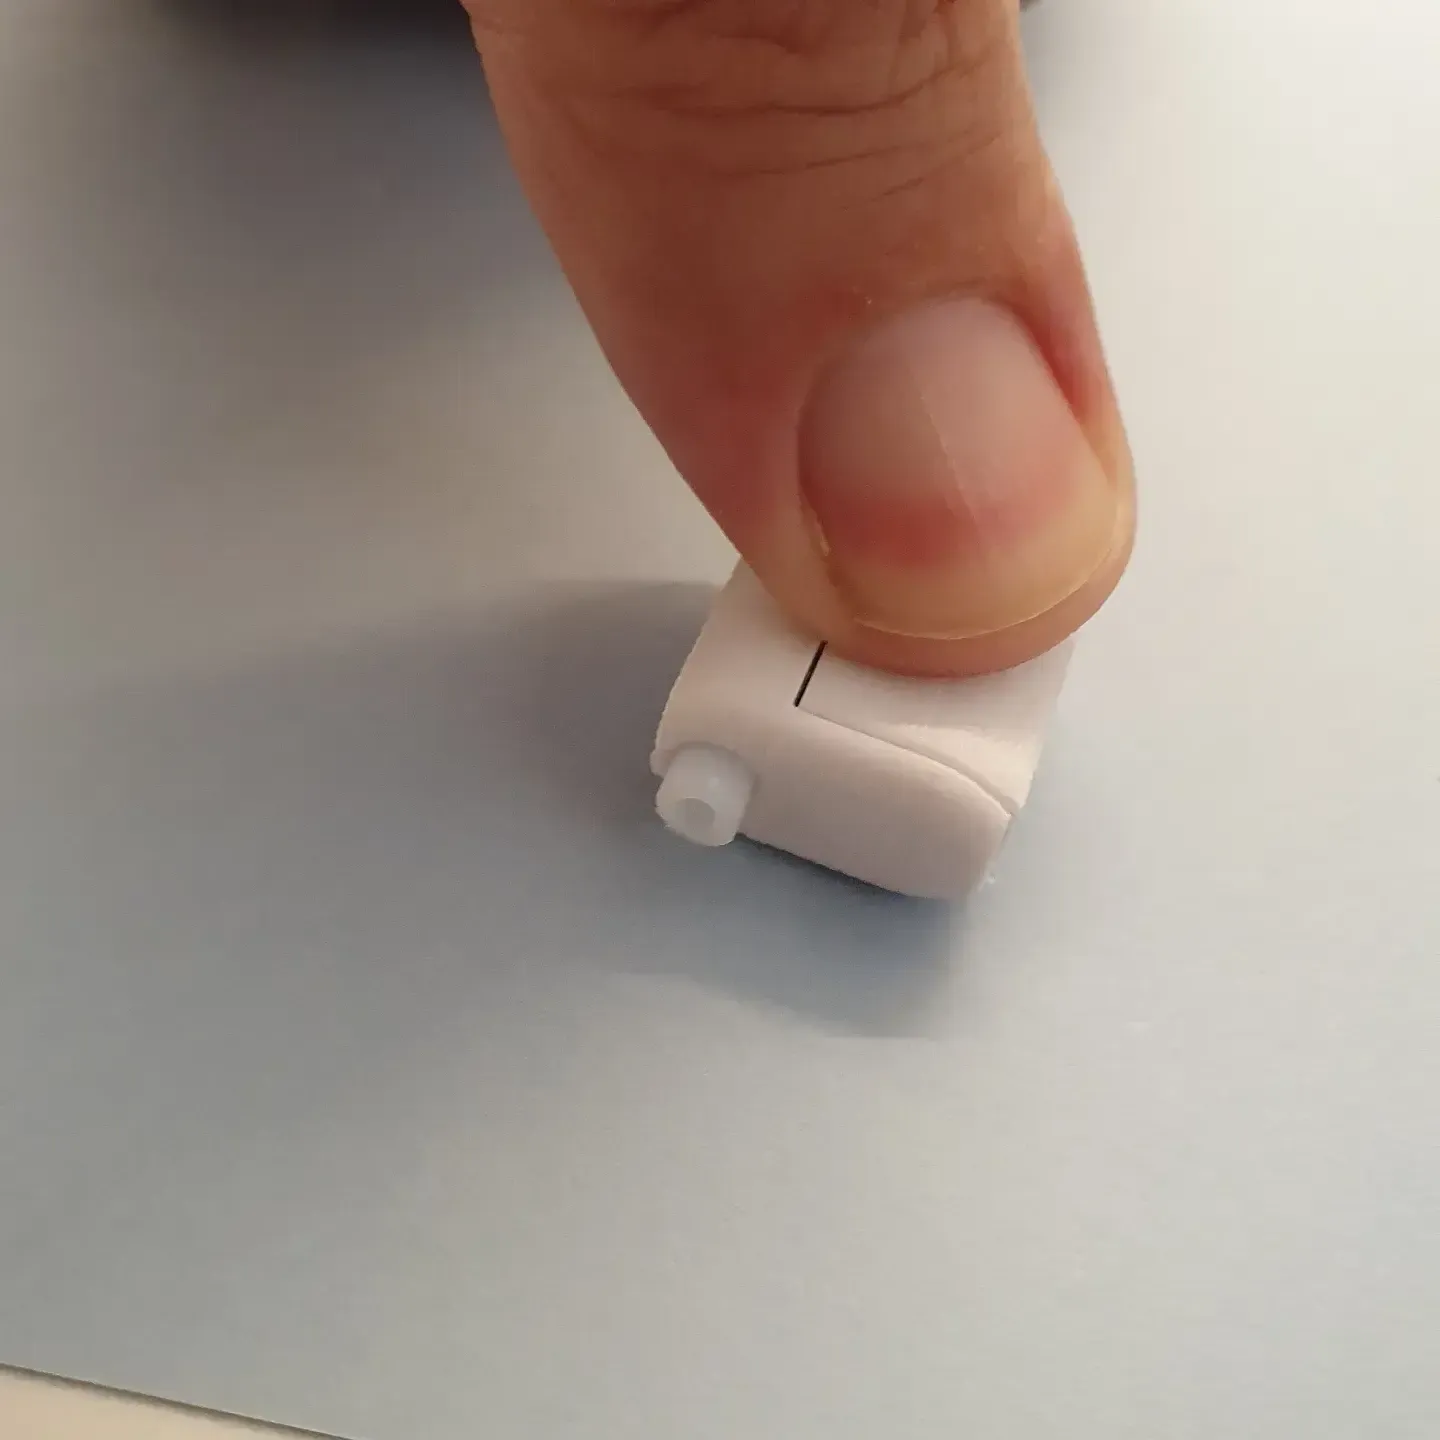 Super Tiny Microswitch Filament Run Out Sensor